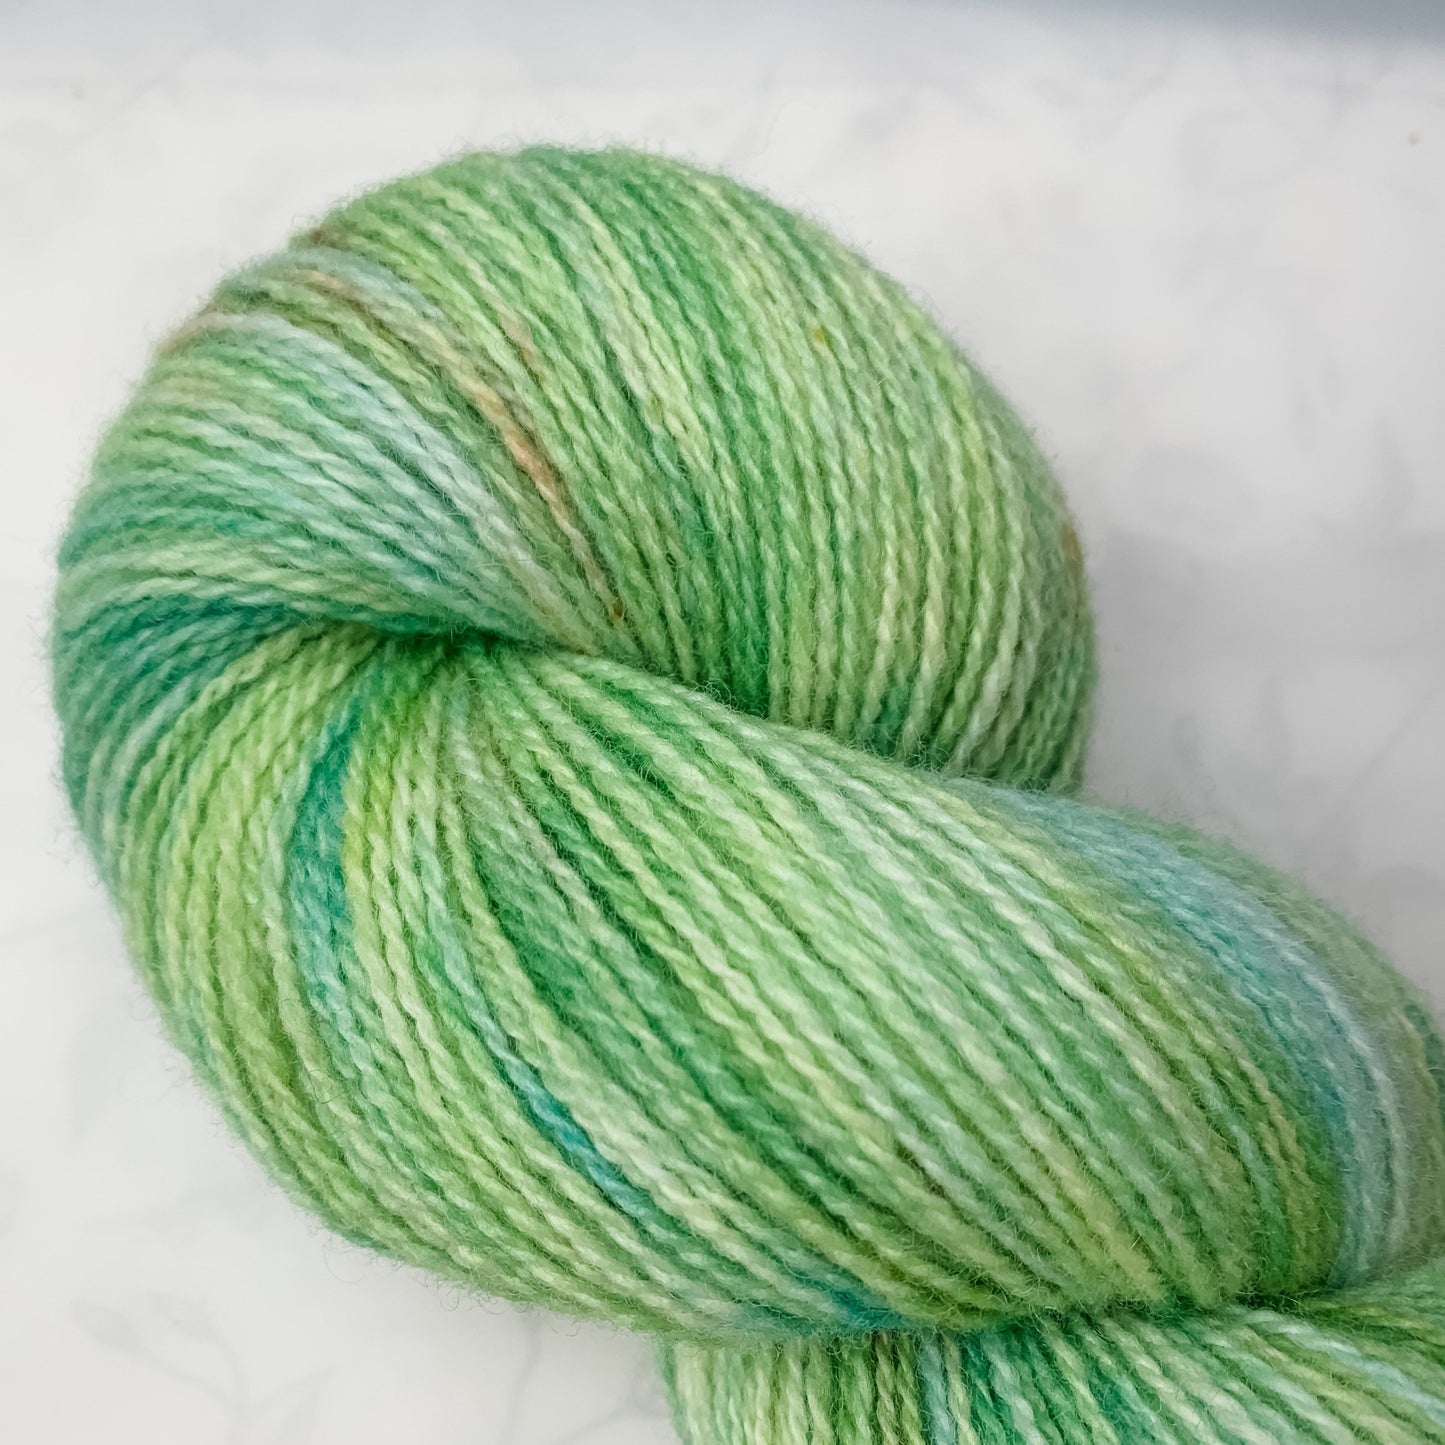 Key Lime - Trollfjord sock - Variagated Yarn - Hand dyed yarn